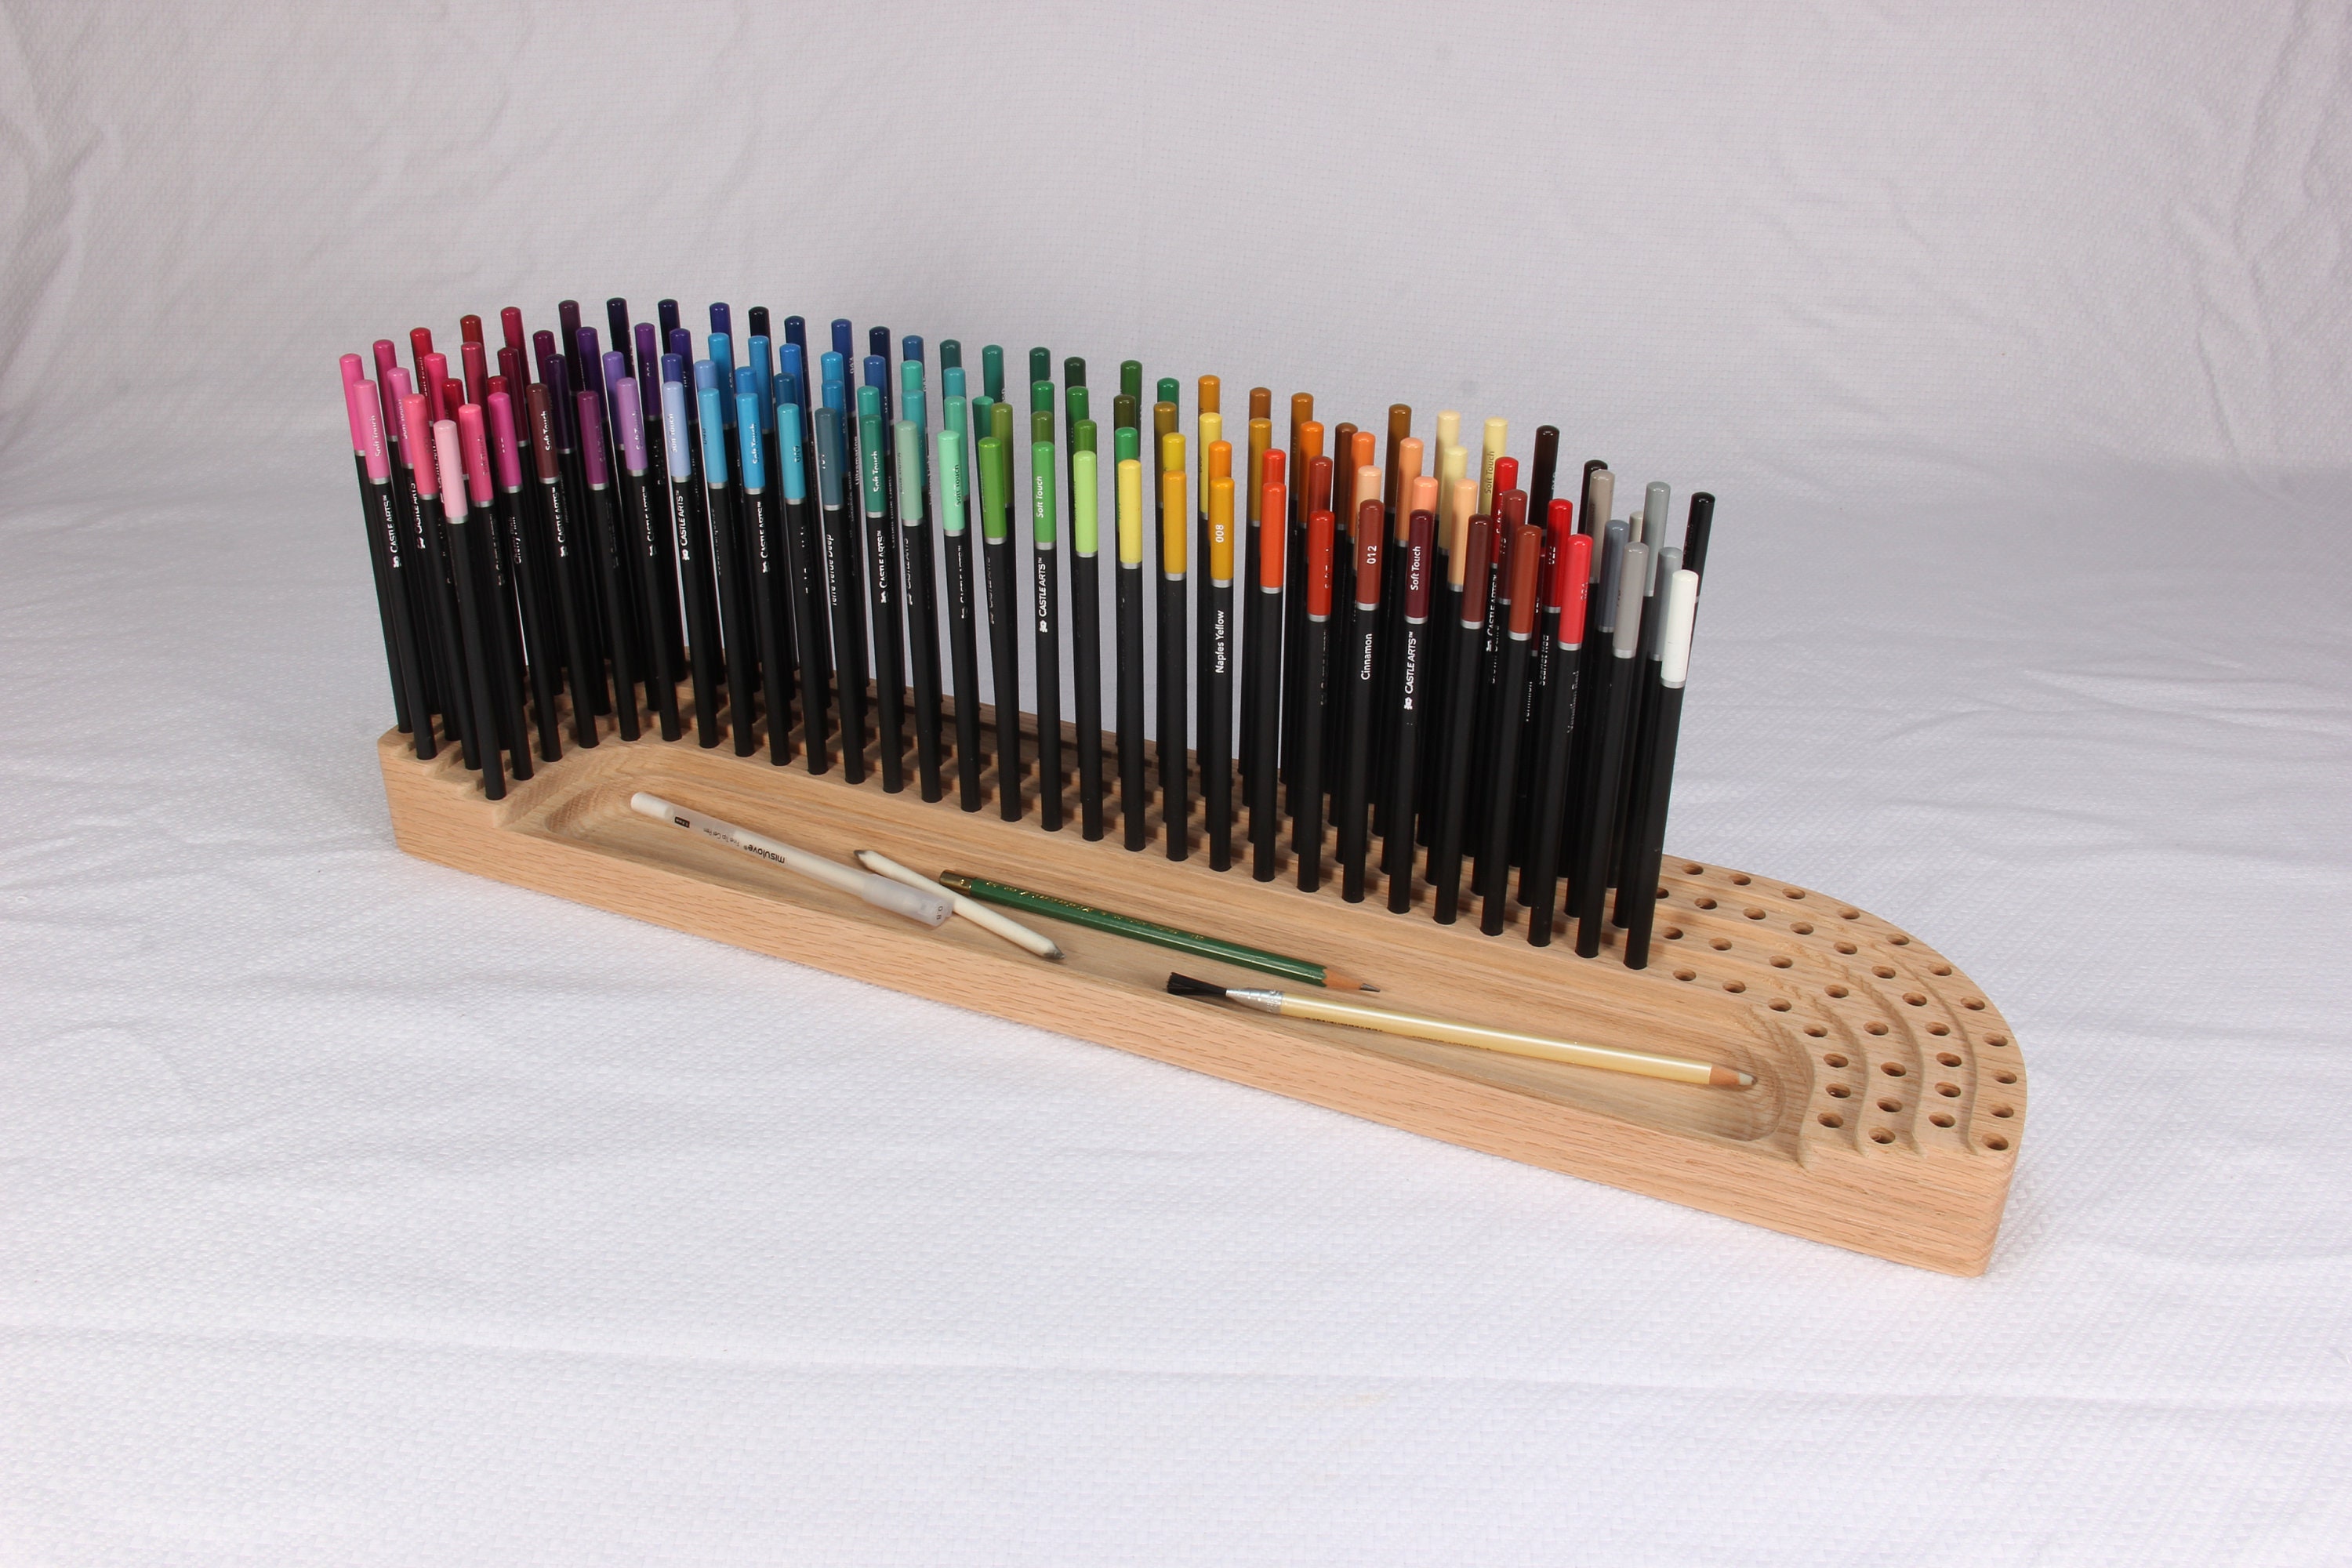 Arrtx Artist 72 Colored Pencils Set with Protective Vertical Insert Box  Organizer Premium Soft Leads Bright